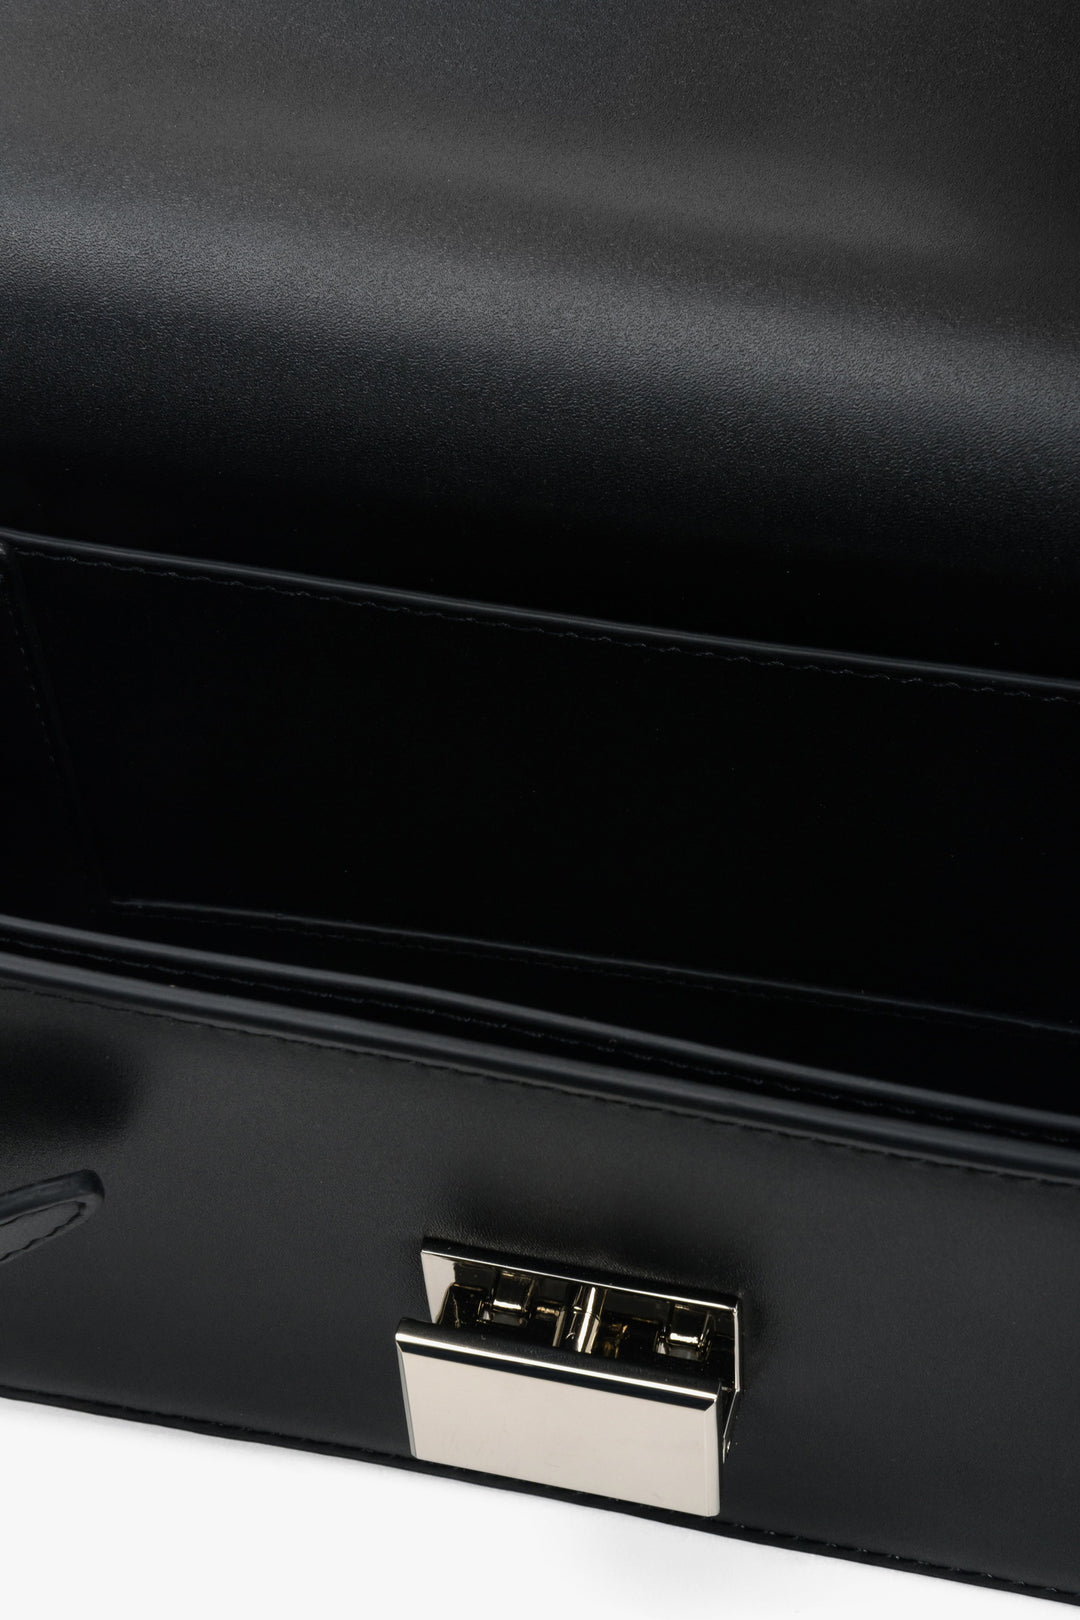 Women's handbag in black genuine leather - close-up on details.